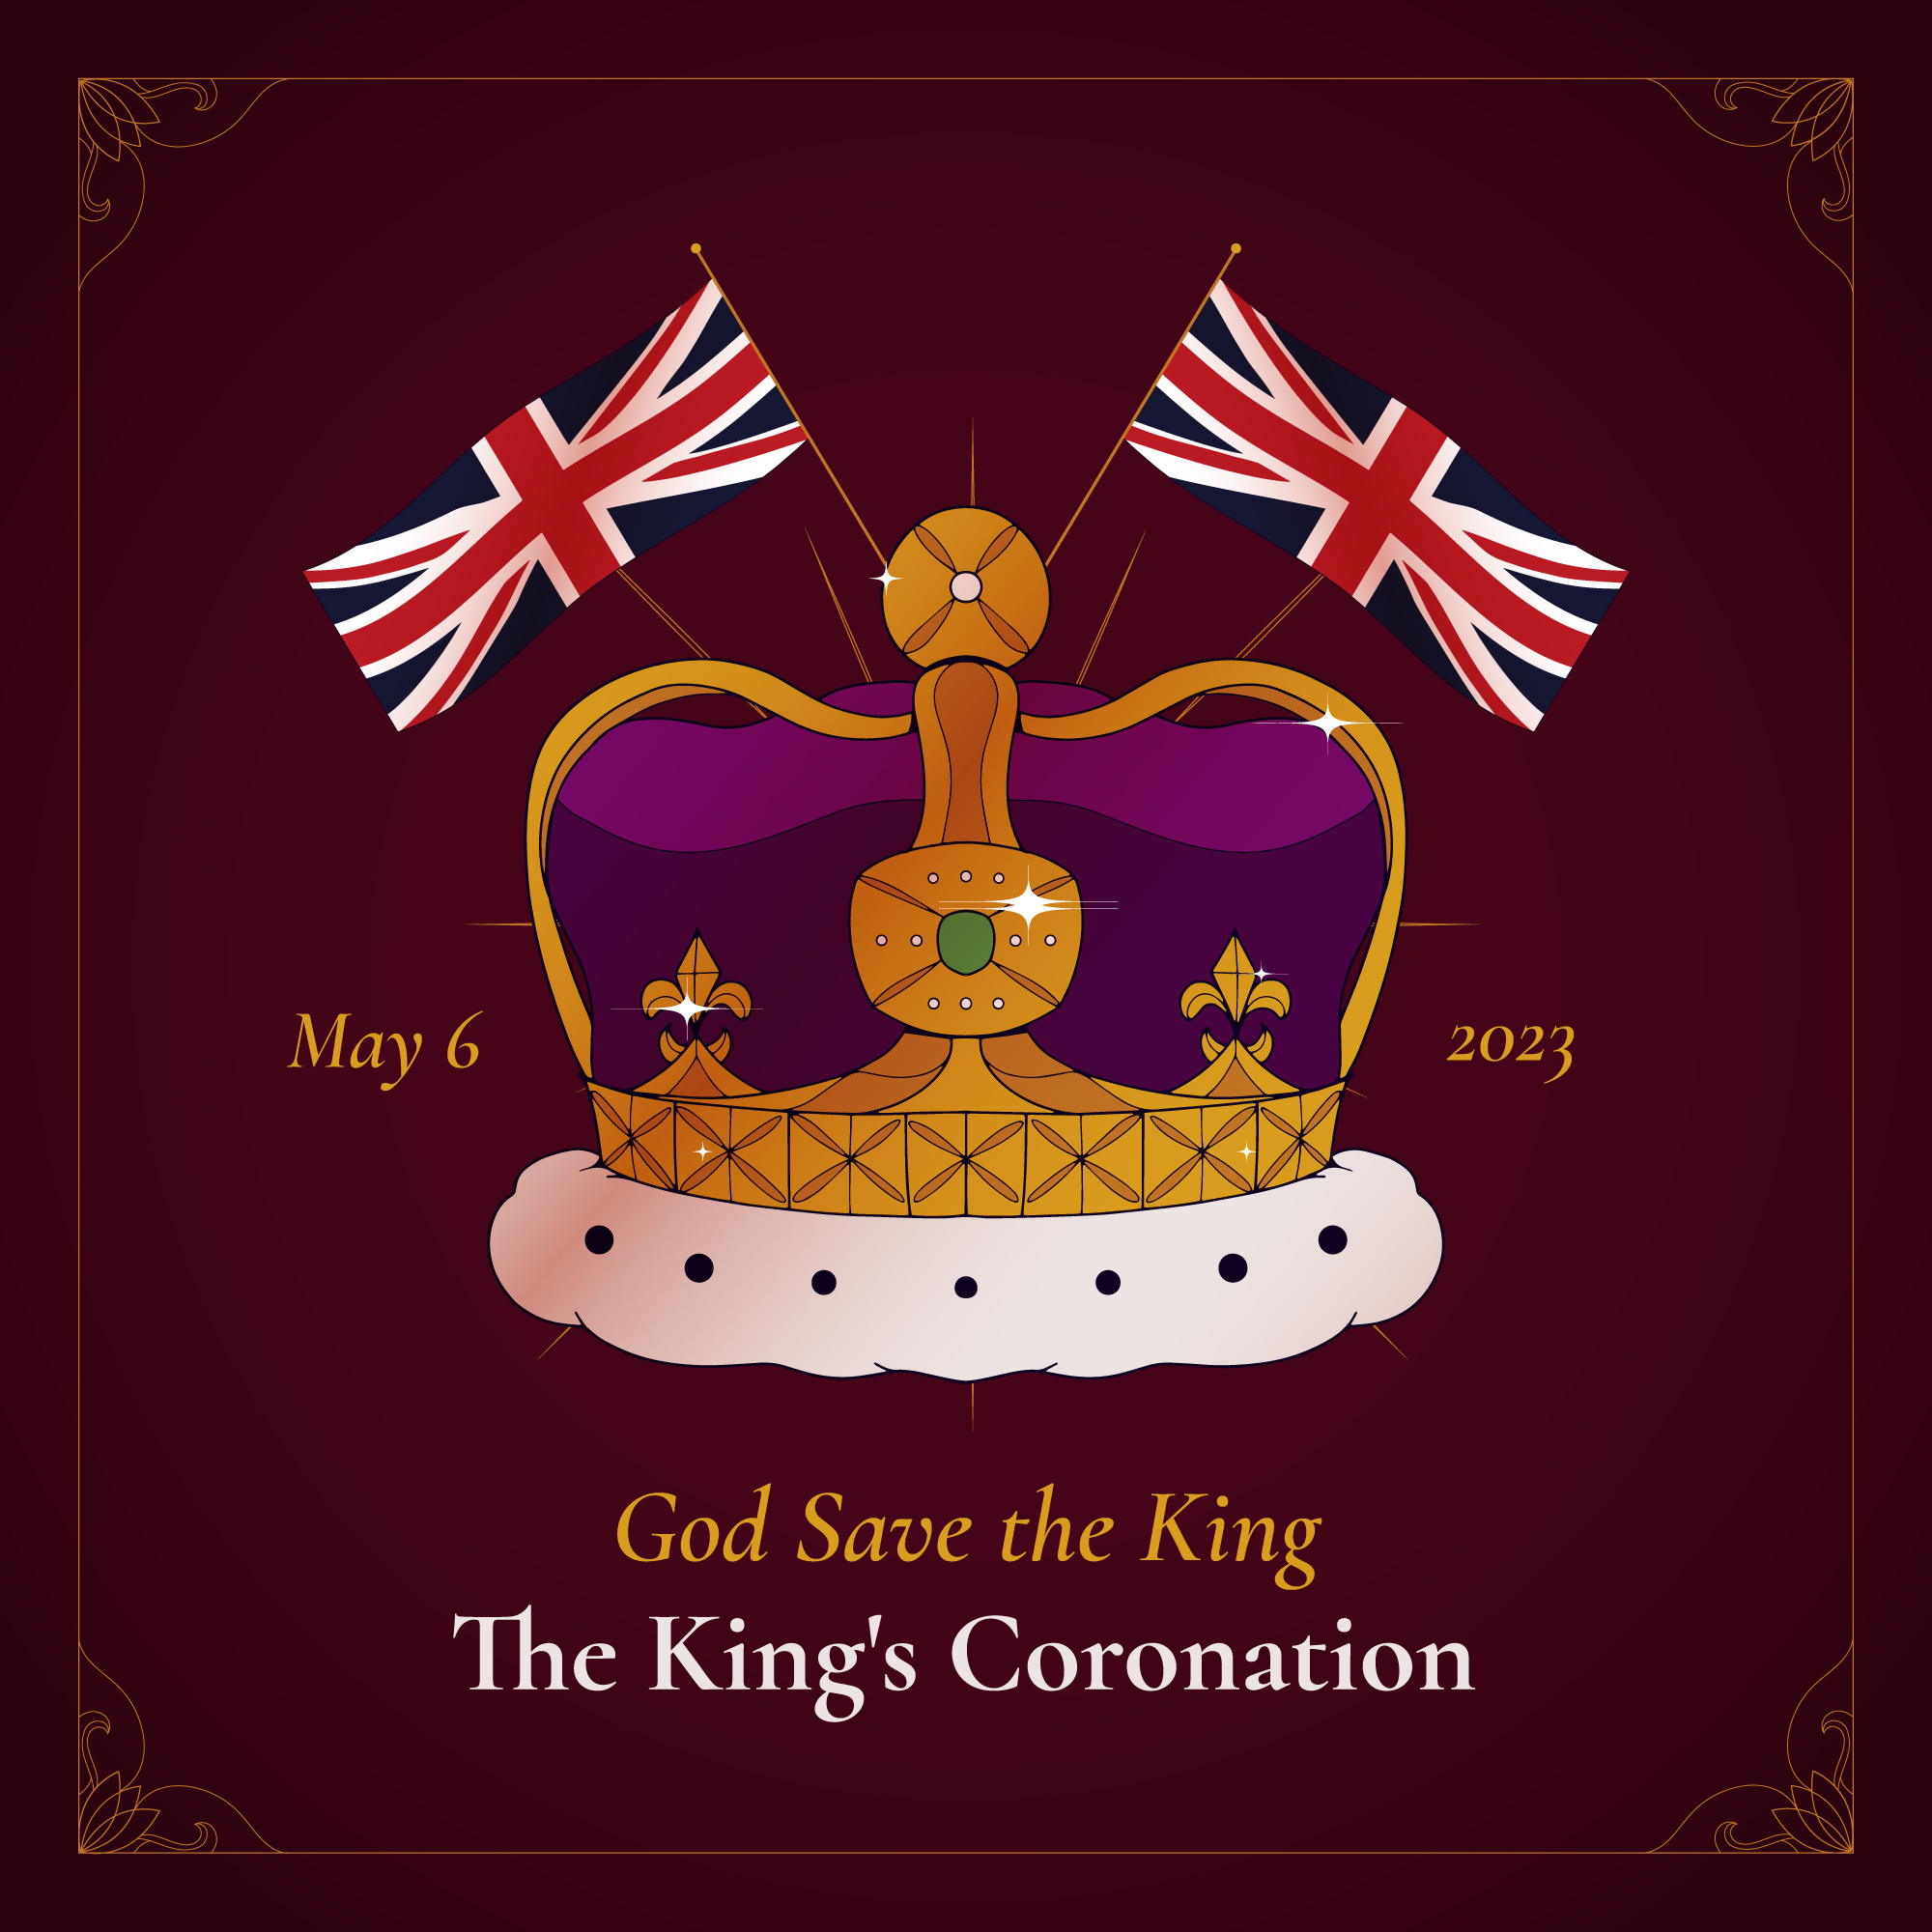 Kick starting the Coronation celebrations